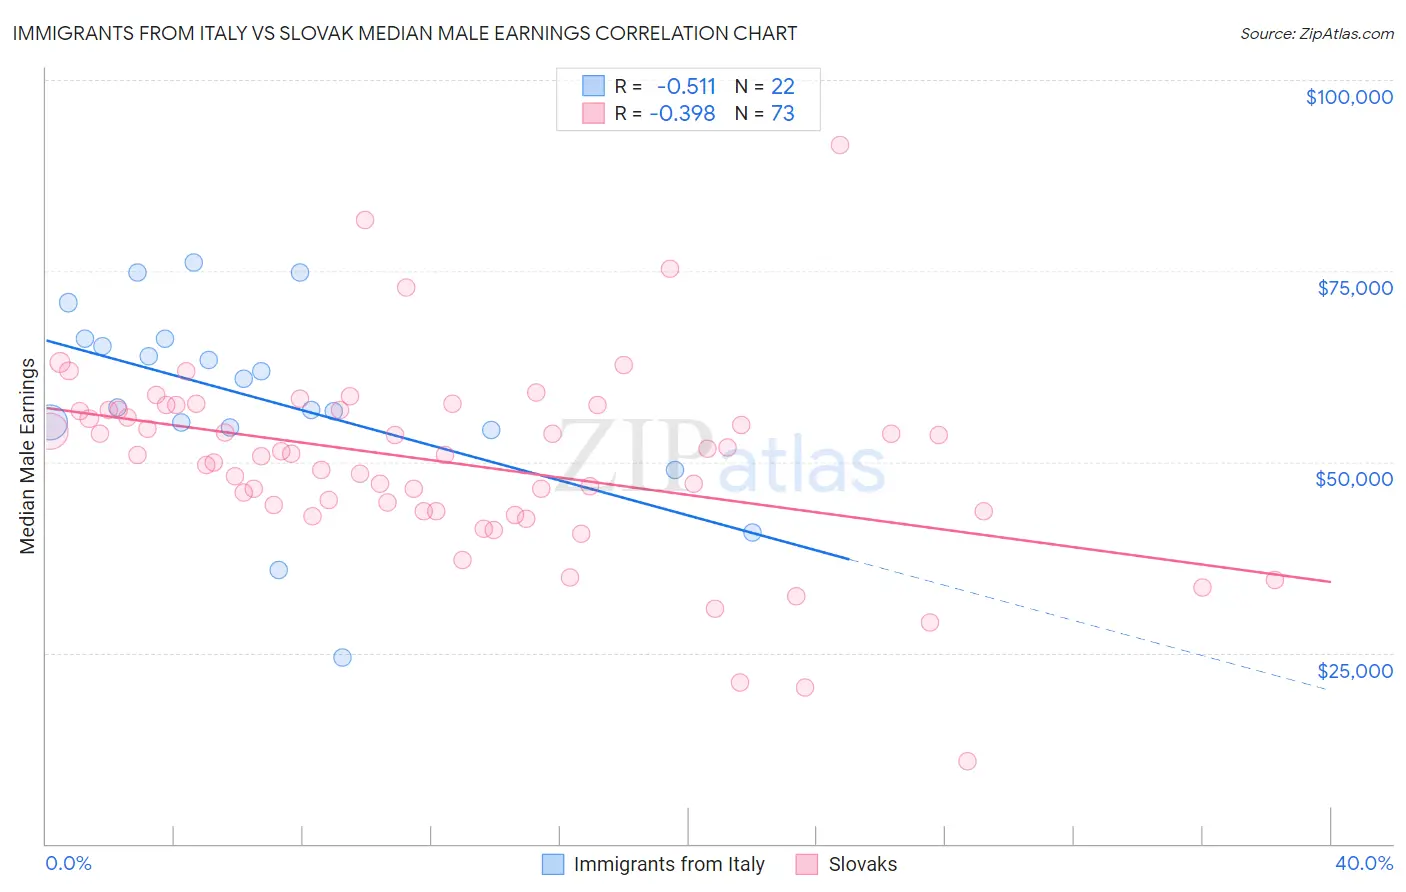 Immigrants from Italy vs Slovak Median Male Earnings